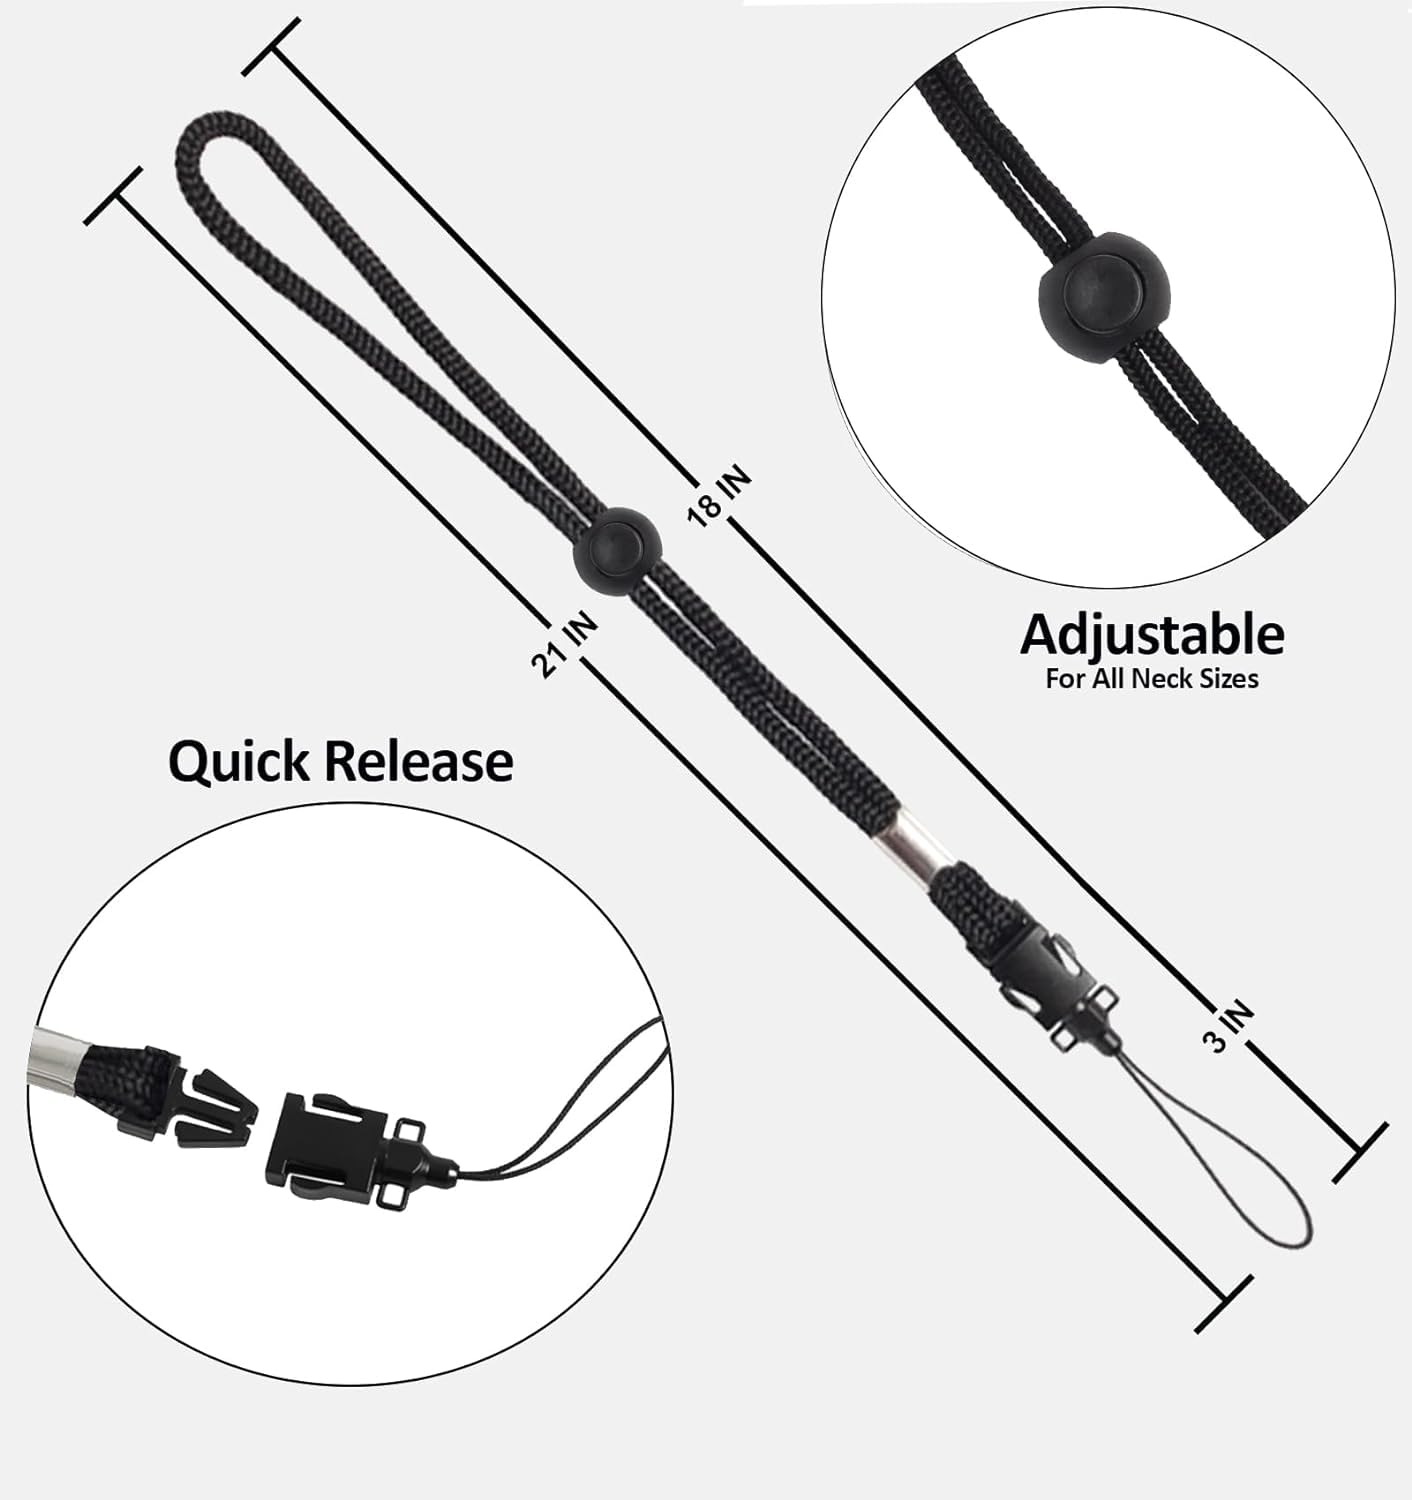 Digital Nc Panasonic Lumix DMC-ZS100 Neck Strap (Lanyard Style) Adjustable With Quick-Release. Black